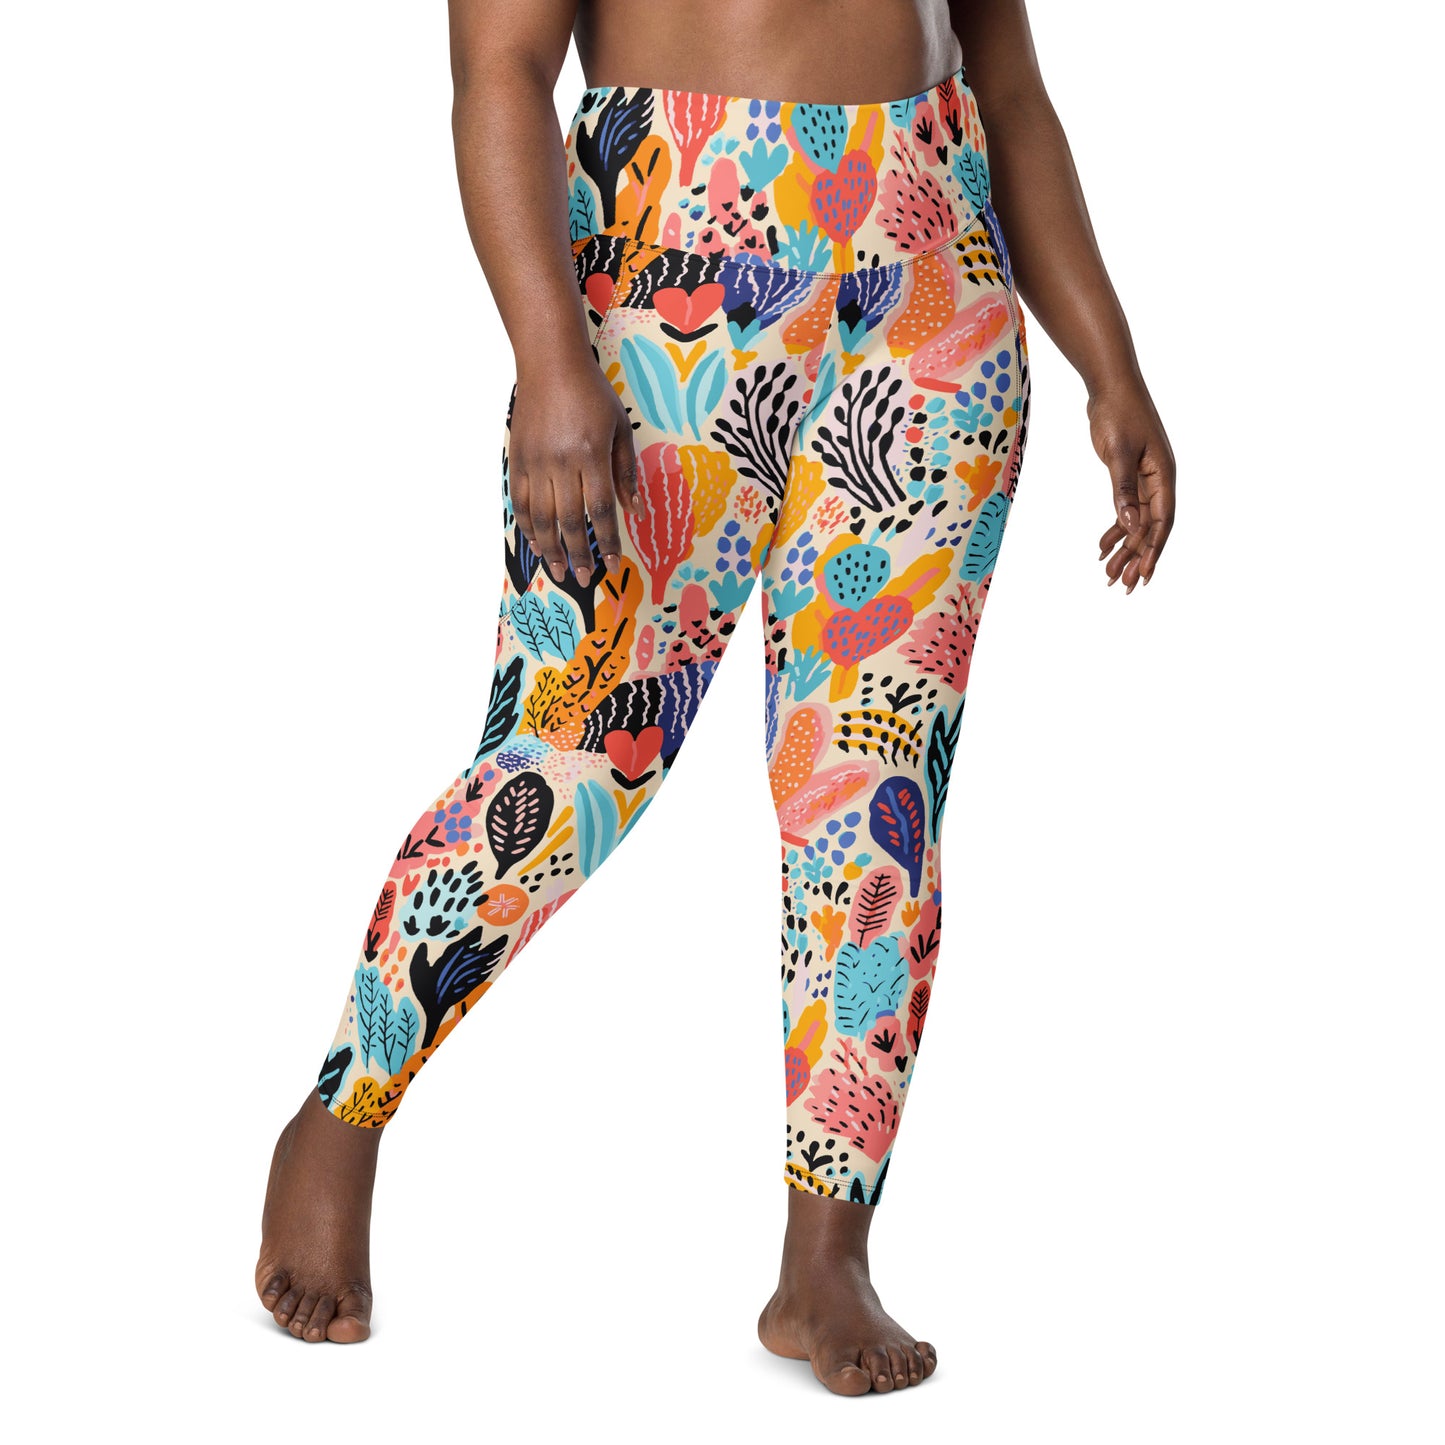 Monopoli High Waist 7/8 Recycled Yoga Leggings / Yoga Pants with Pockets